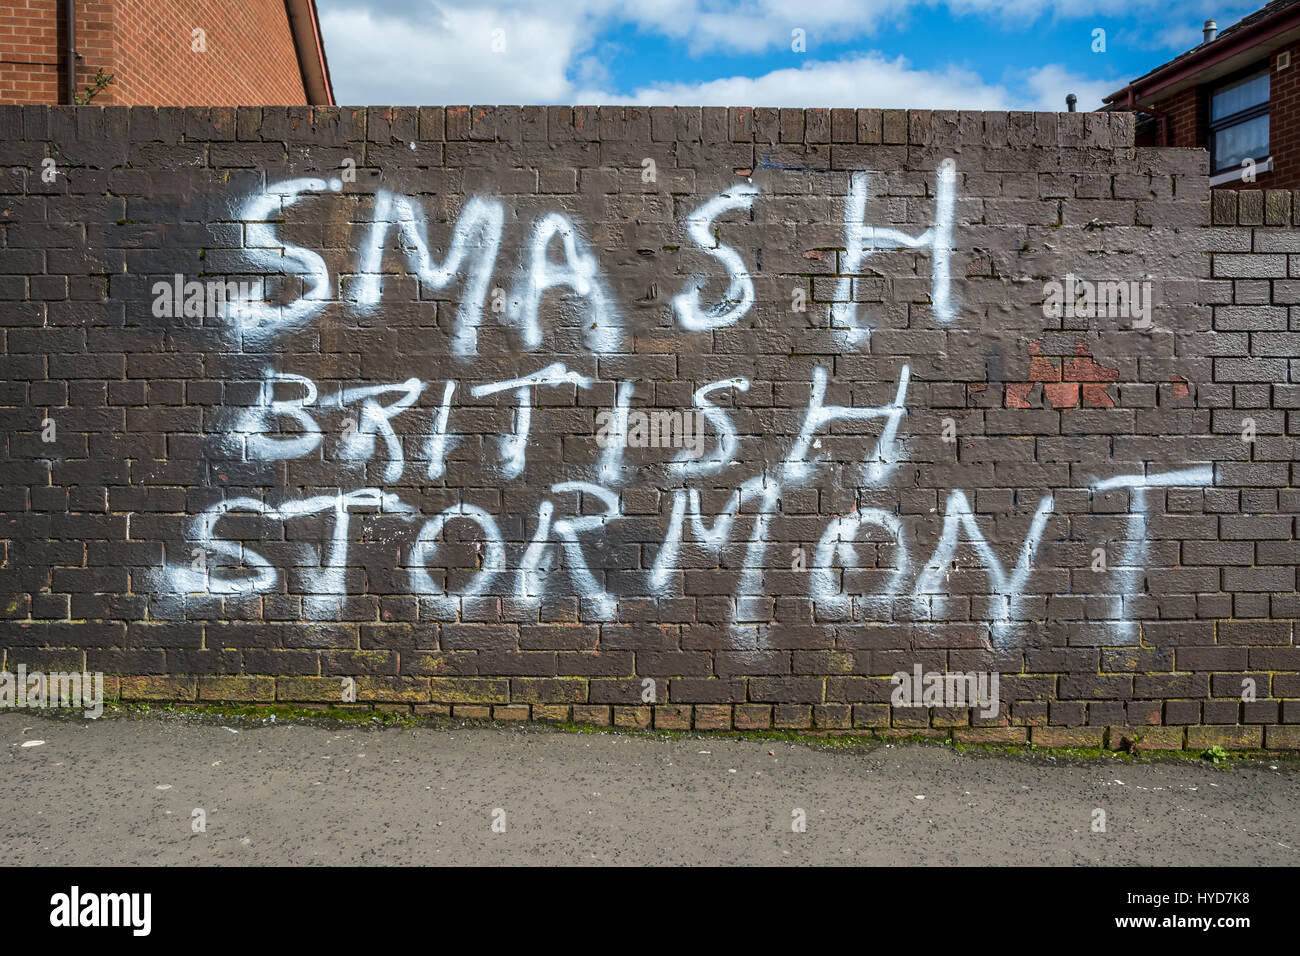 Smash British Stormont graffiti in New Lodge area of Belfast Stock Photo